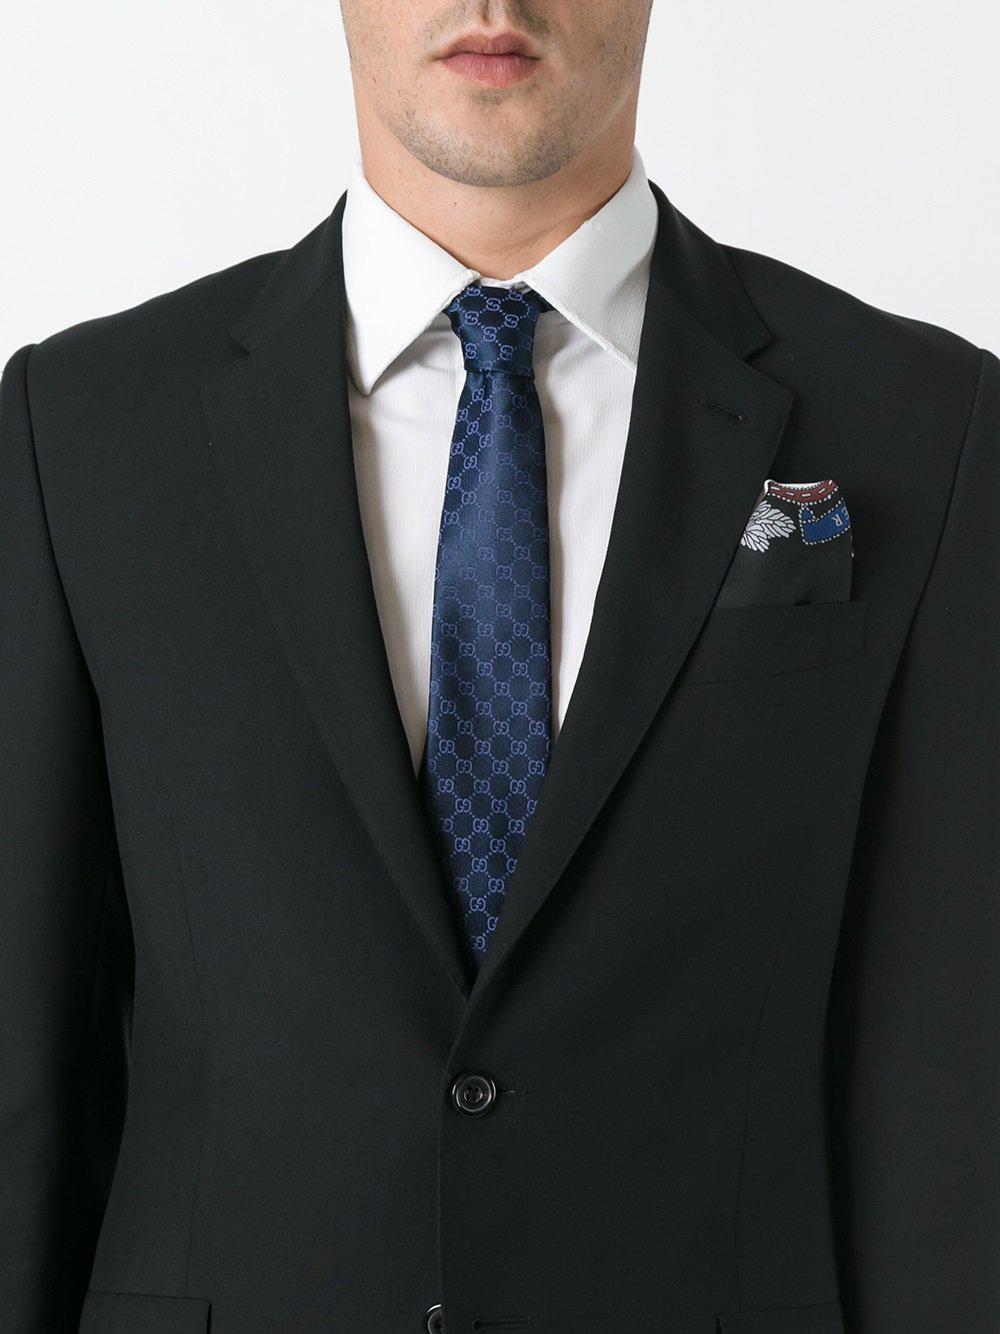 Gucci Silk Gg Pattern Tie in Blue for Men - Lyst